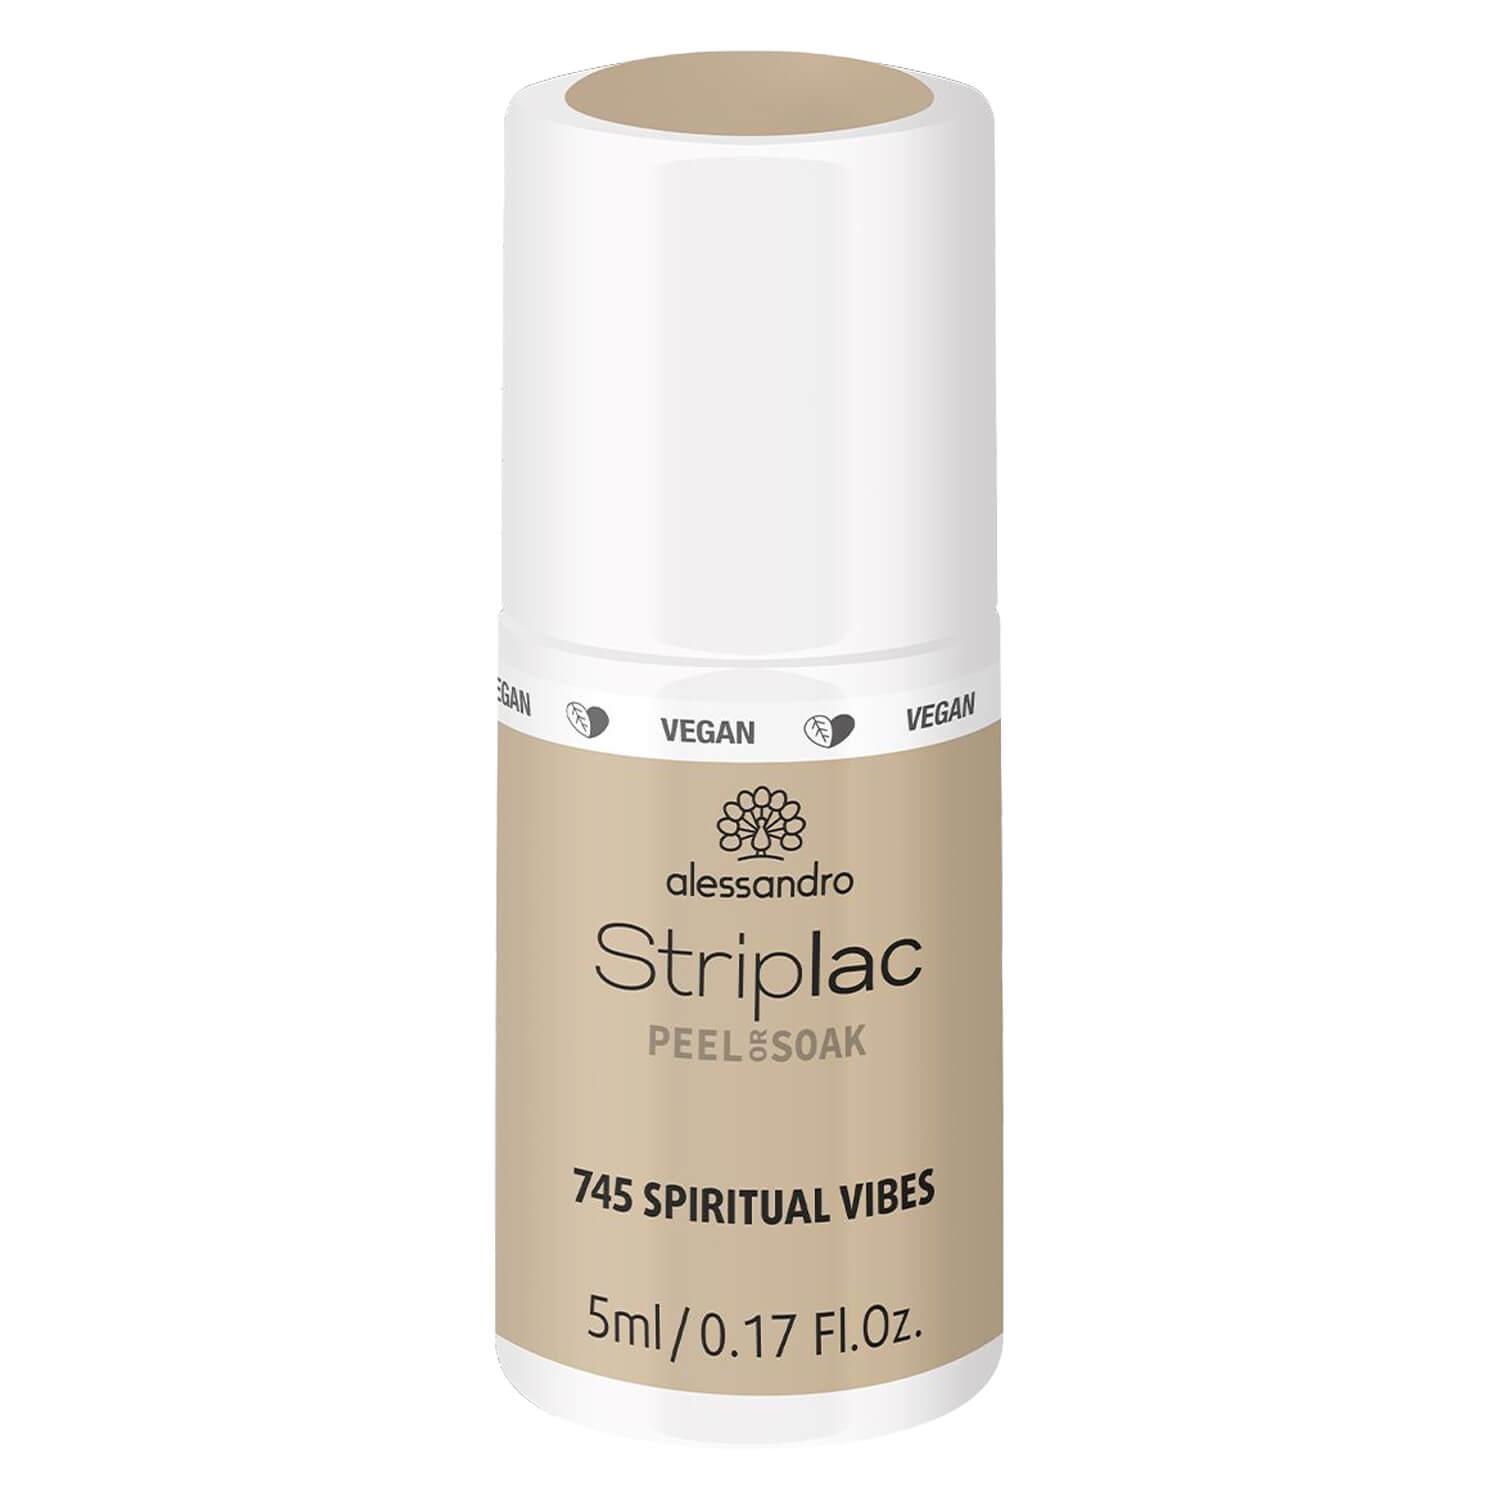 Striplac Peel or Soak 745 Spiritual Vibes